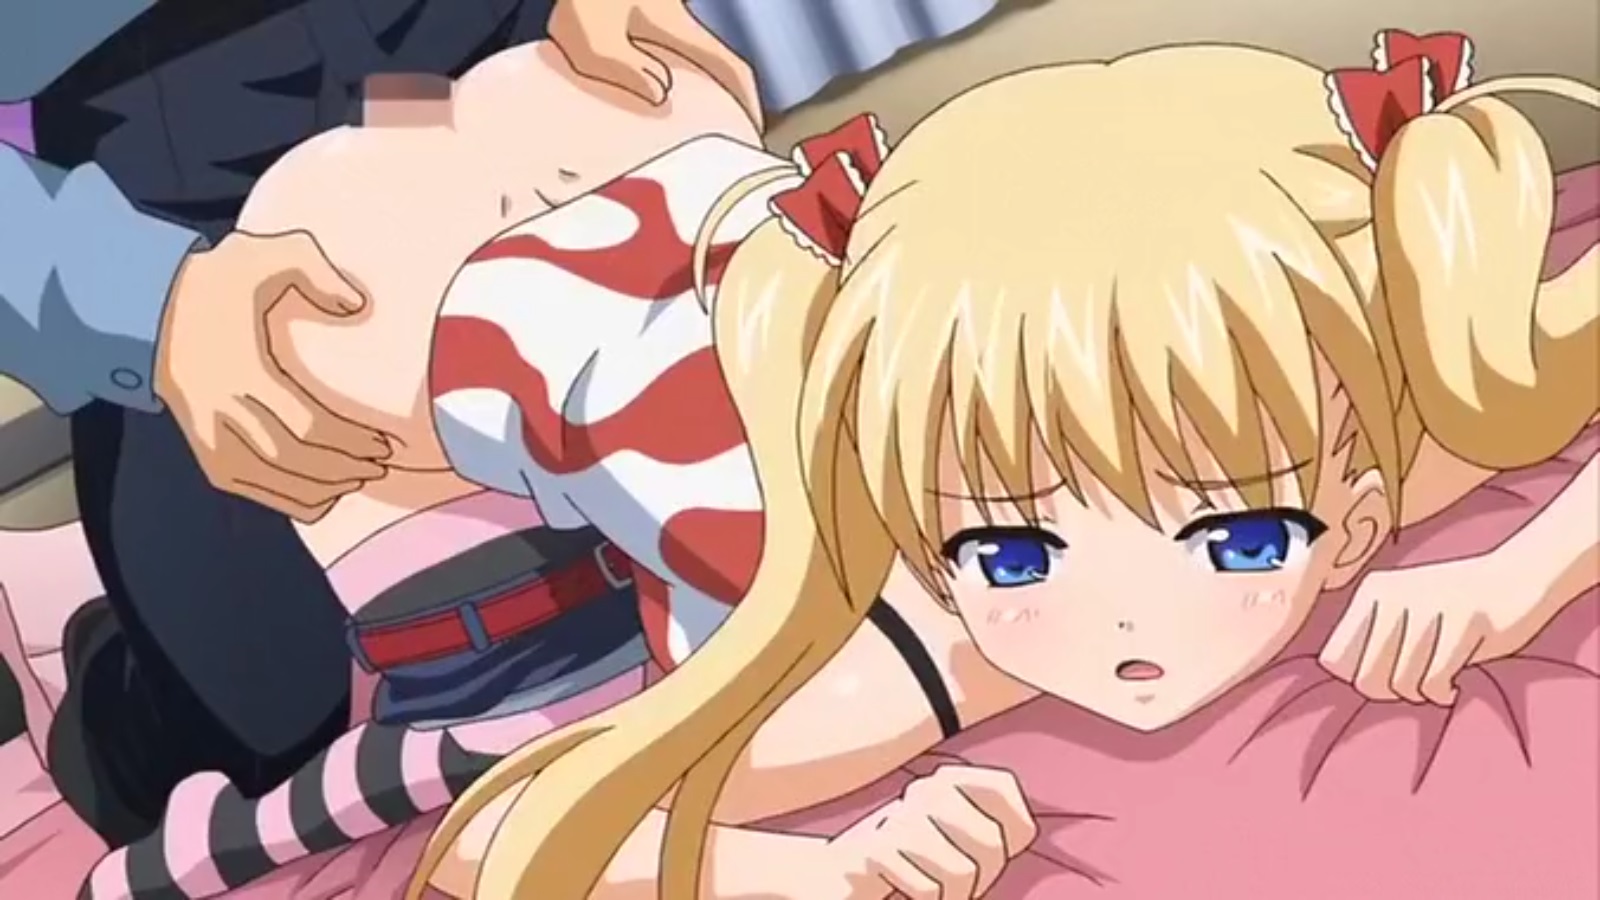 Porn hot henati Anime Hentai